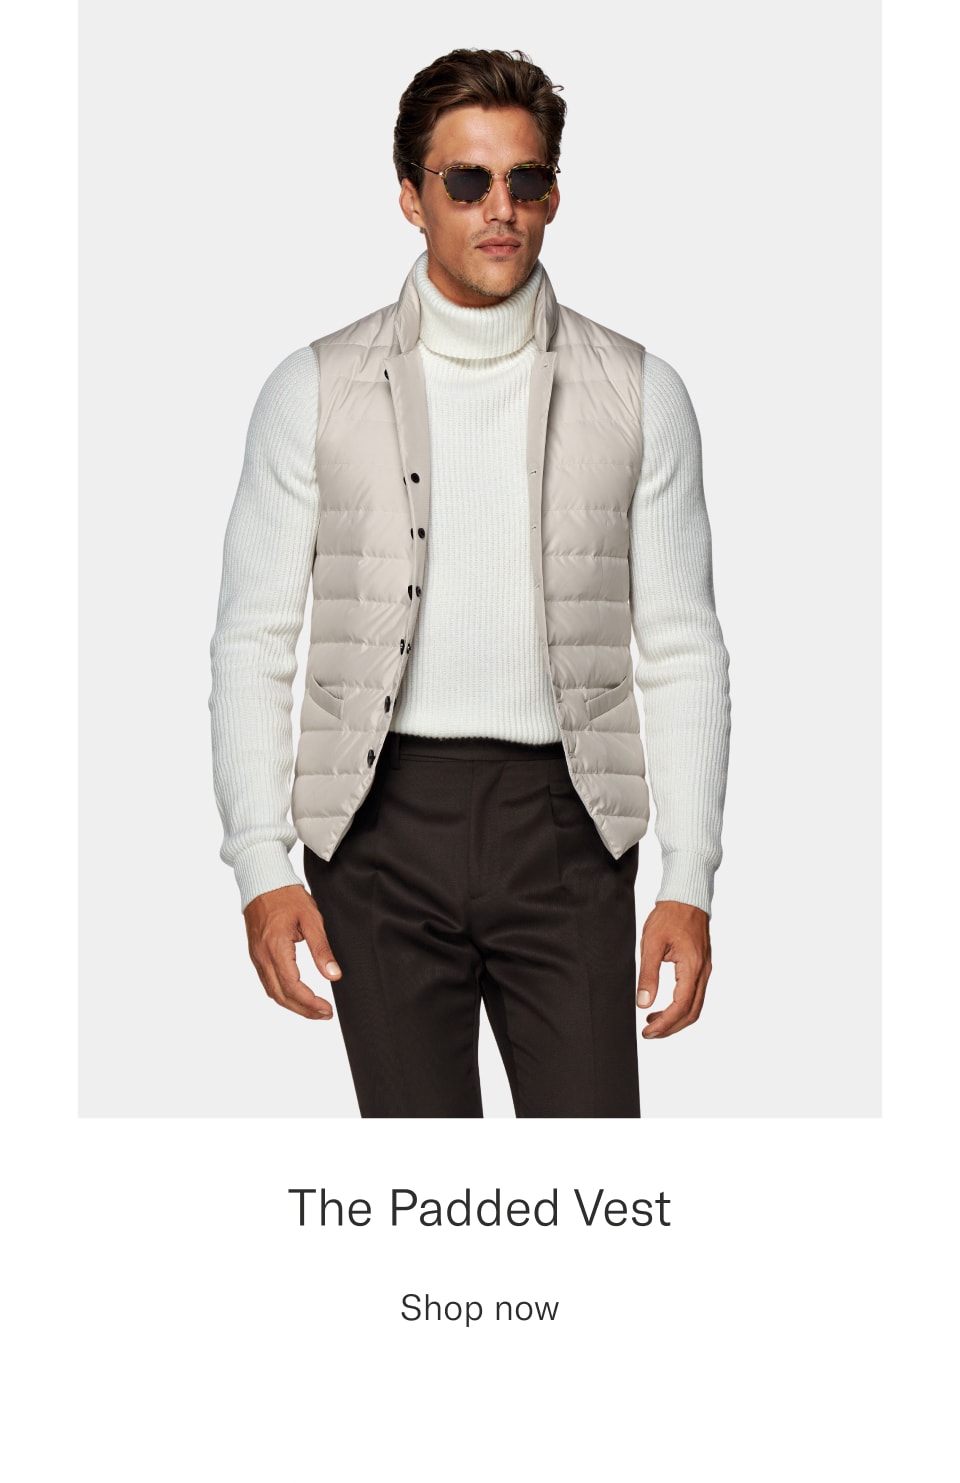 The padded vest